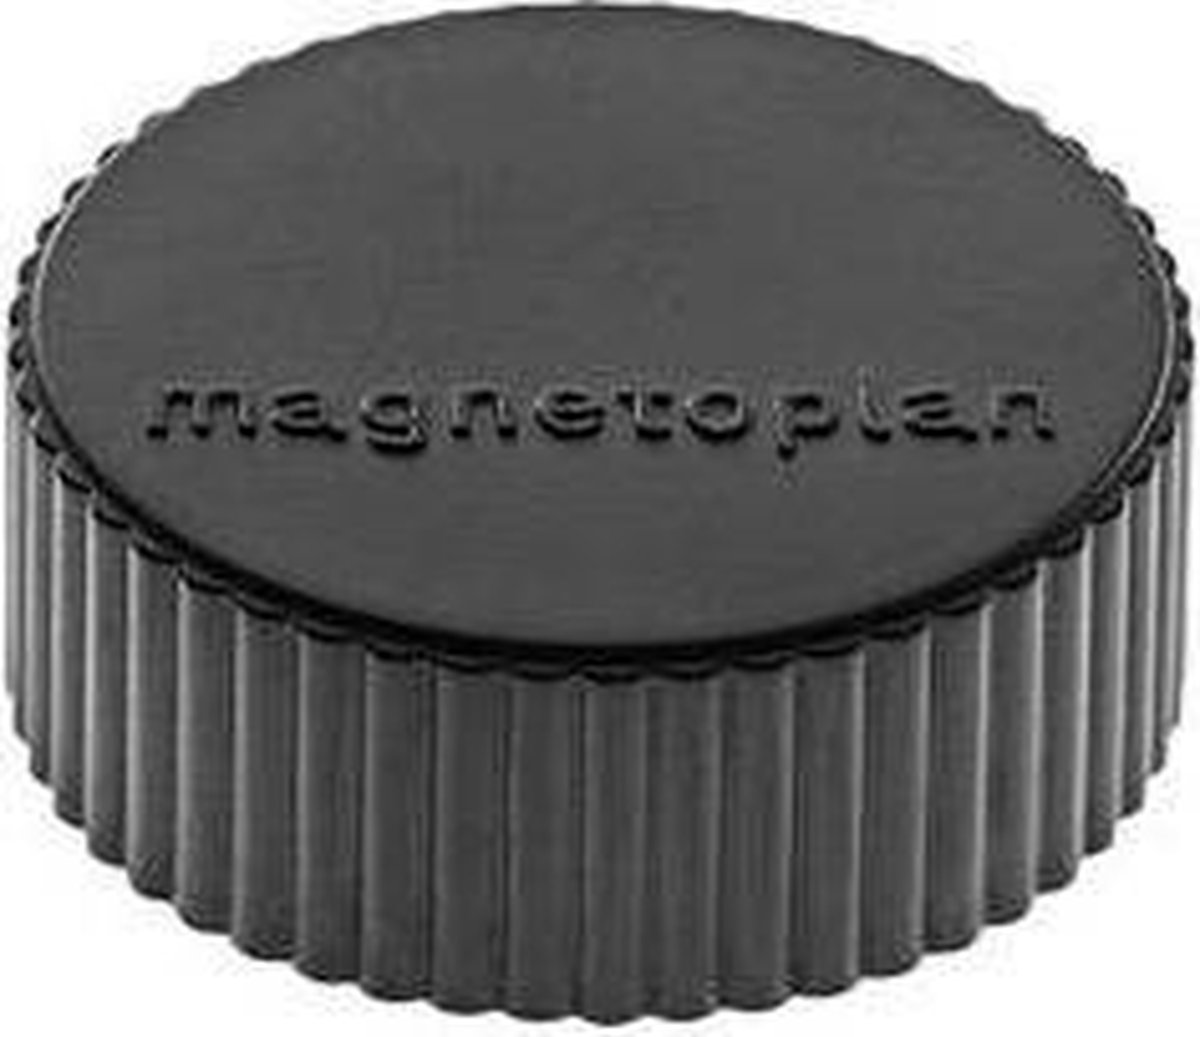 Magnetoplan Magneet Discofix Magnum (Ø x h) 34 mm x 13 mm rond Zwart 10 stuk(s) 1660012